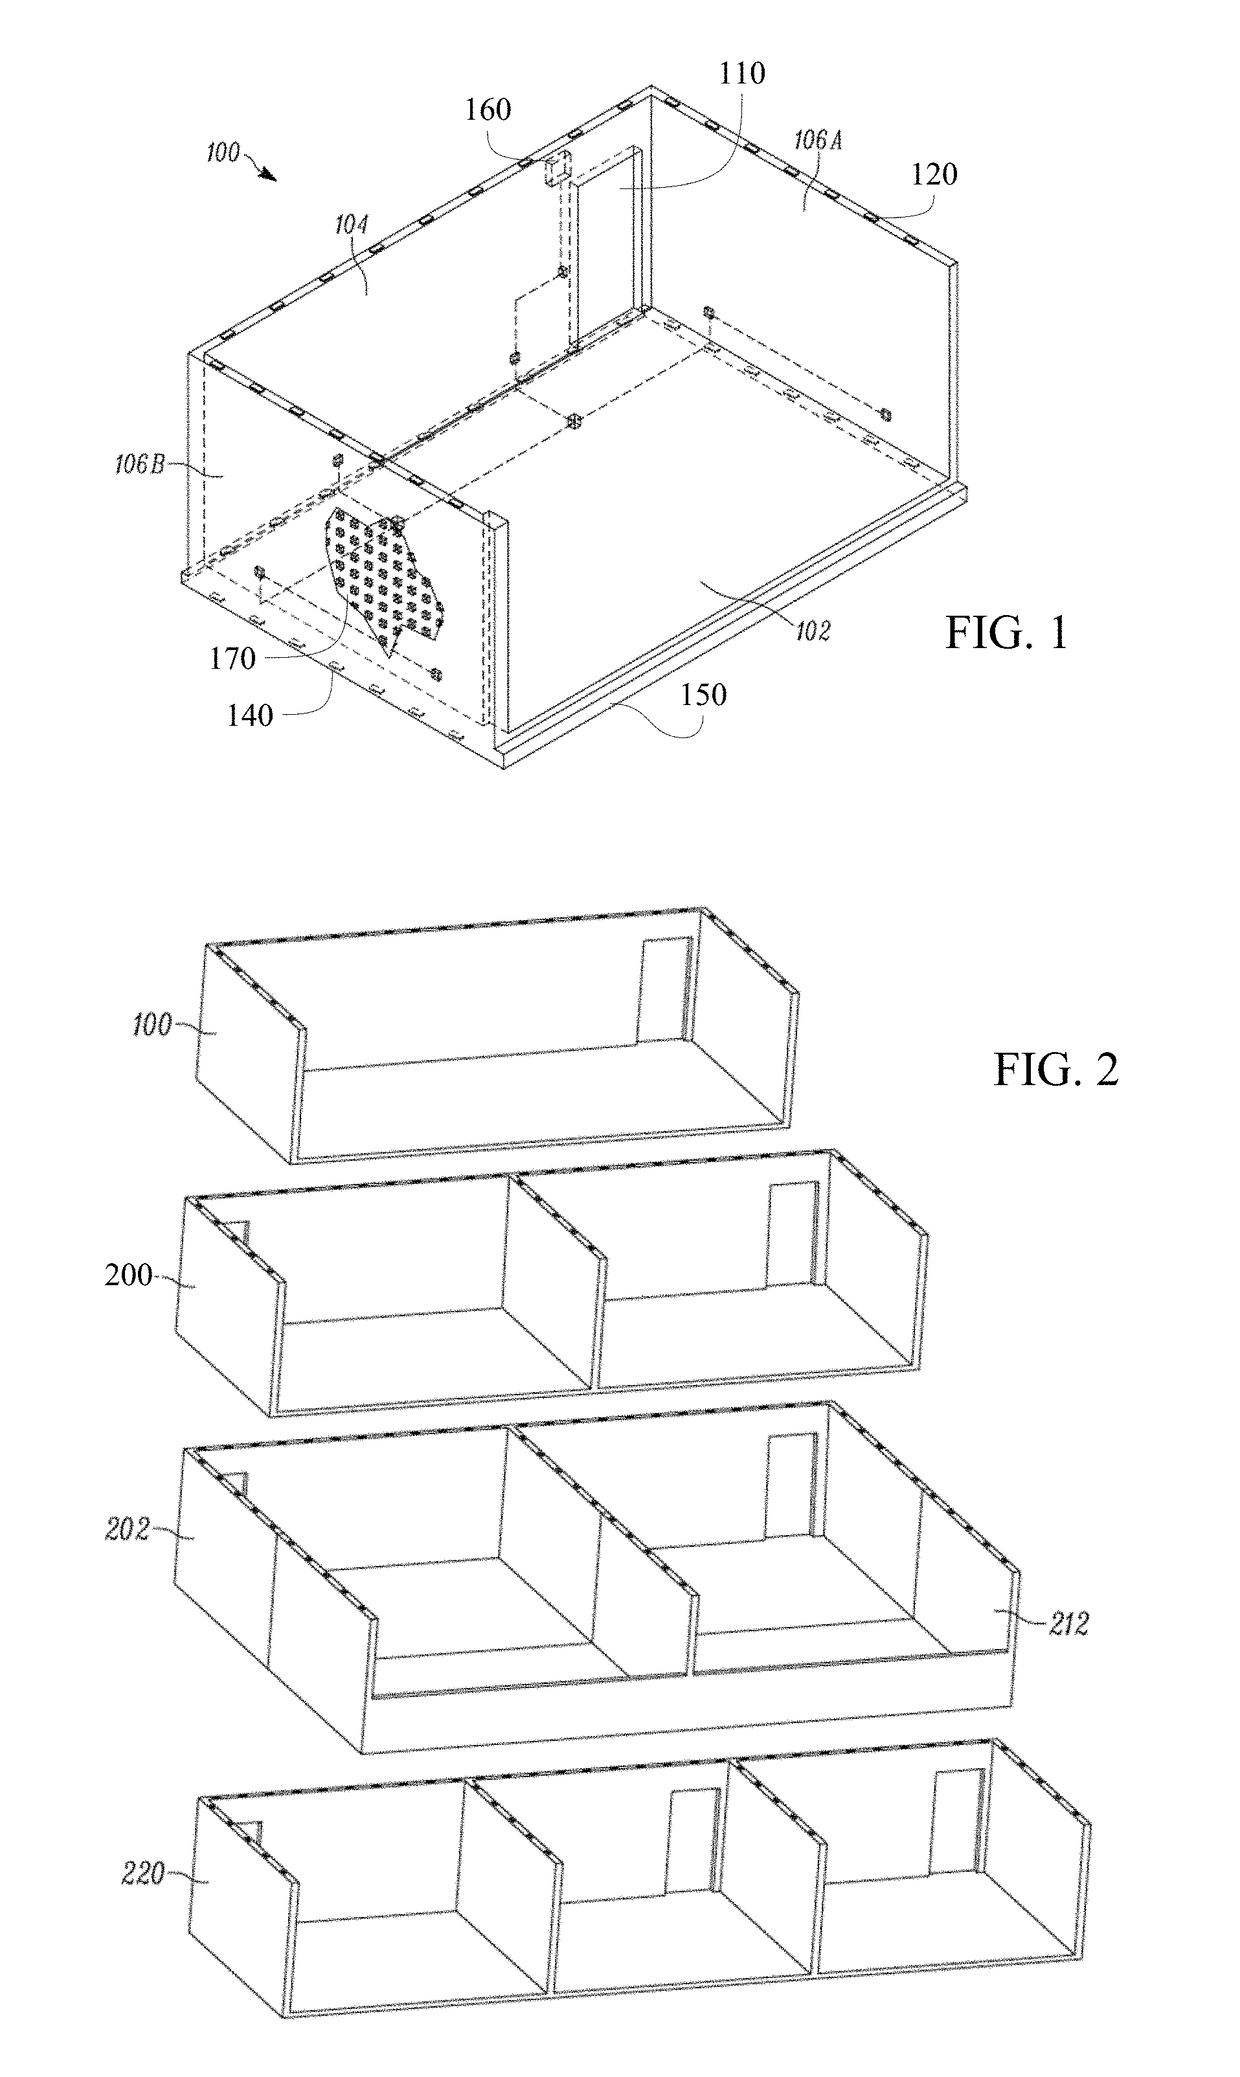 Portable robotic casting of volumetric modular building components